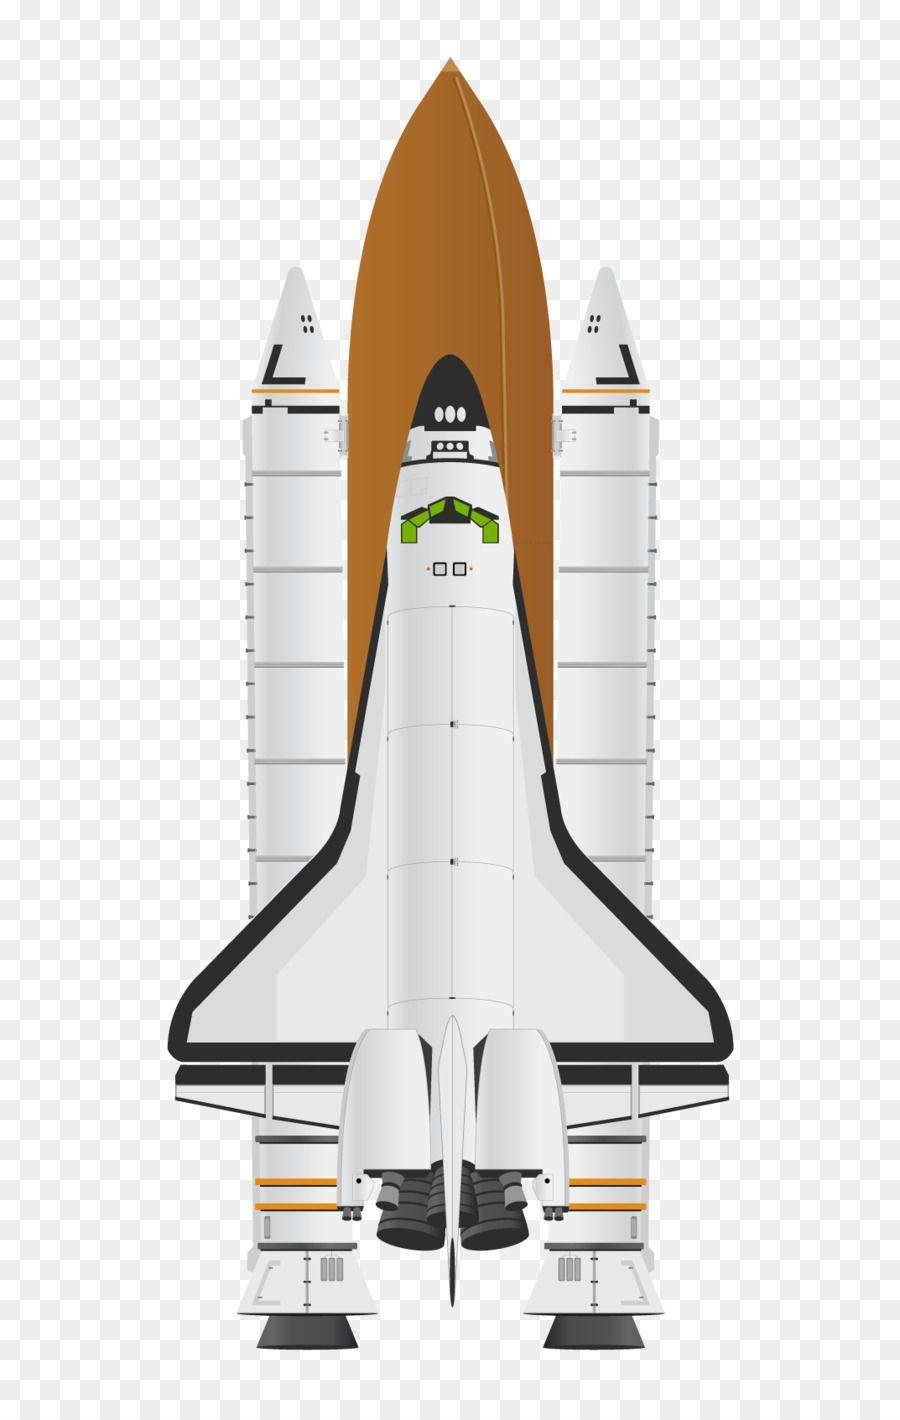 NASA Spaceship Logo - Space Shuttle program Spacecraft NASA - spaceship png download ...